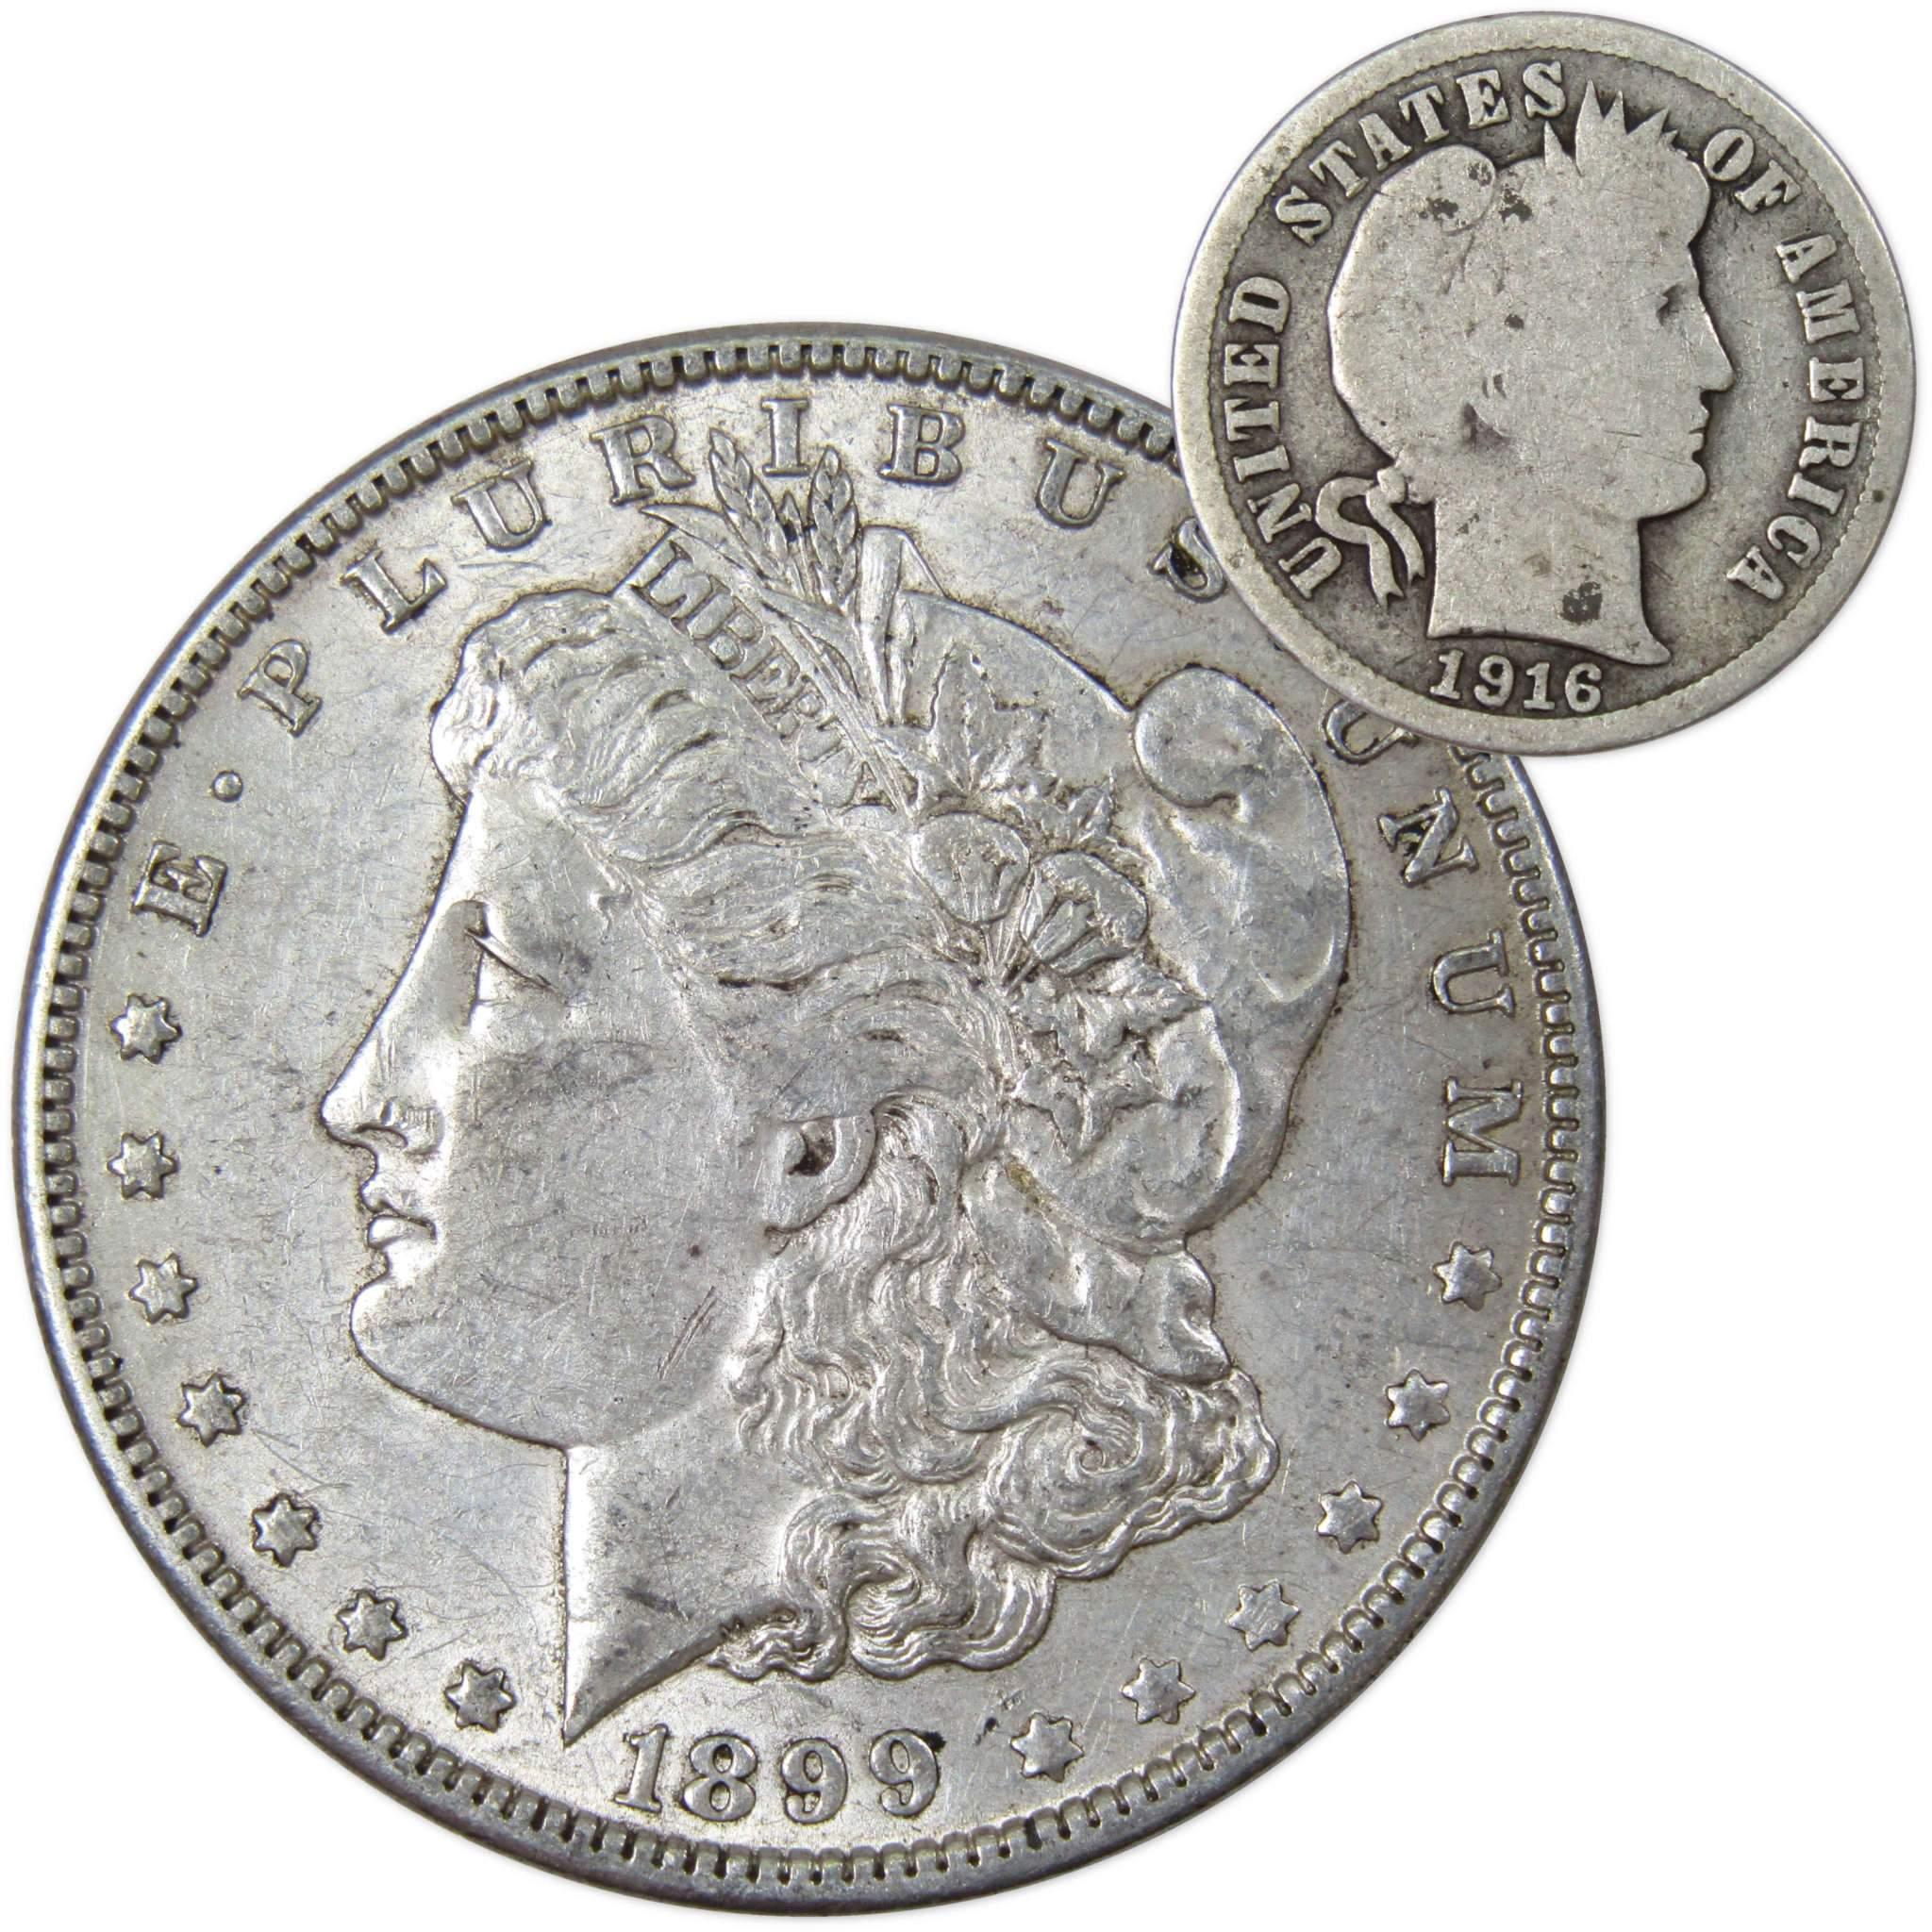 1899 O Morgan Dollar XF EF Extremely Fine with 1916 Barber Dime G Good - Morgan coin - Morgan silver dollar - Morgan silver dollar for sale - Profile Coins &amp; Collectibles